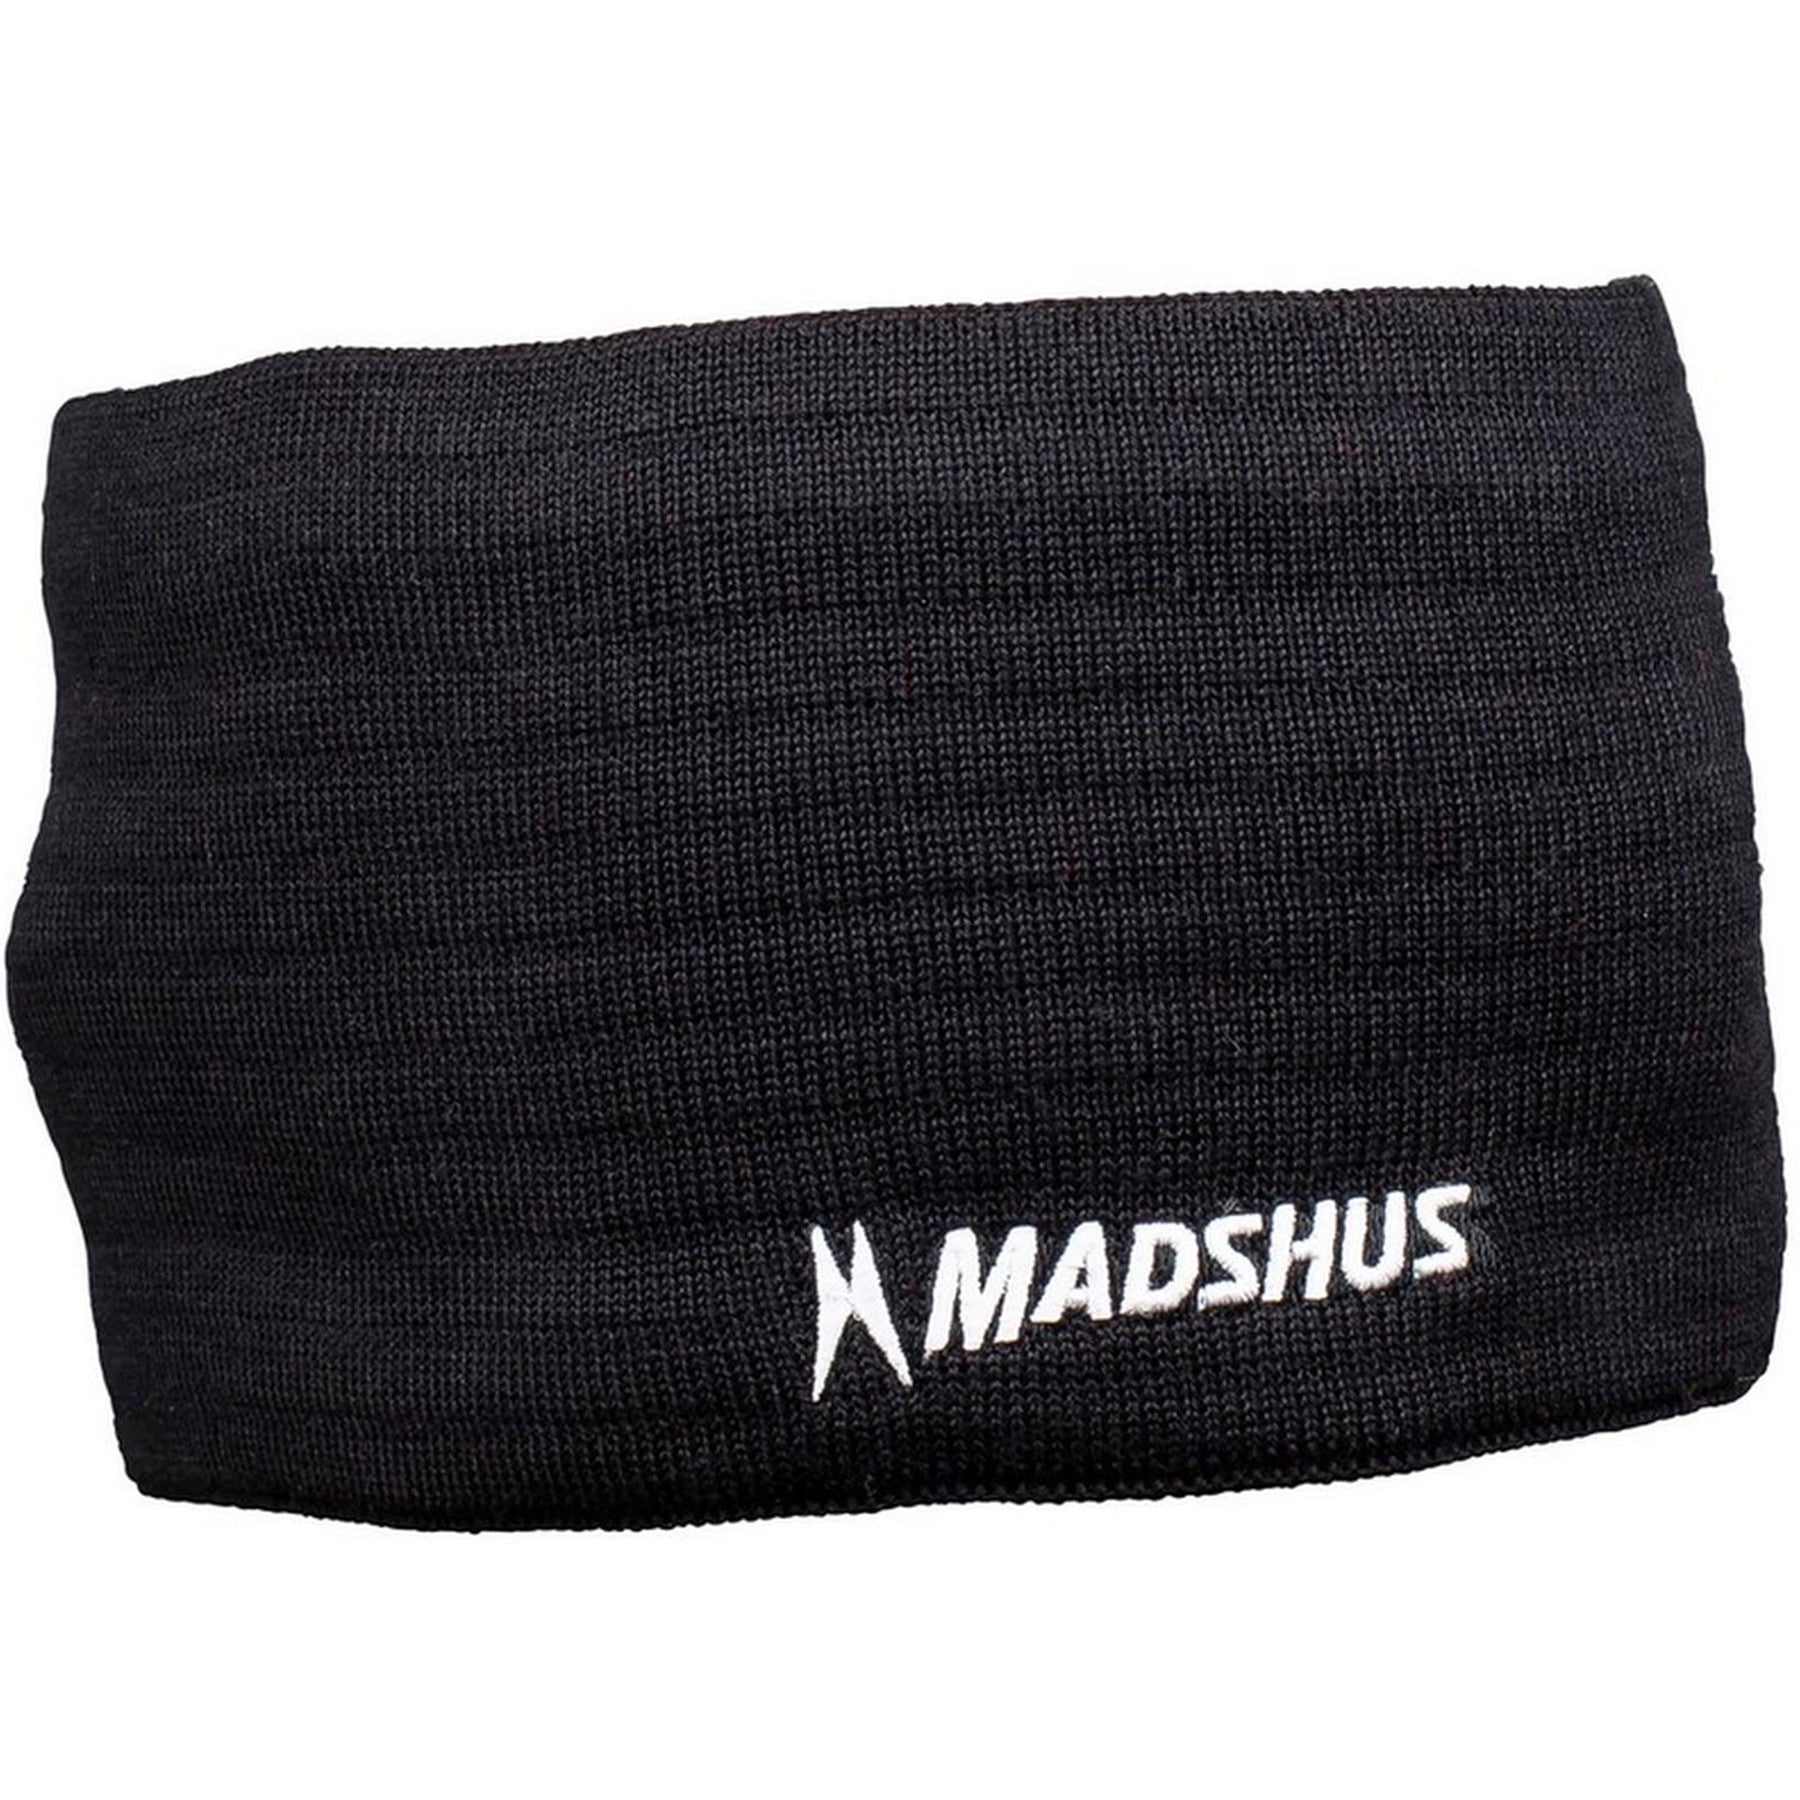 Madshus M Headband 2021 - 0